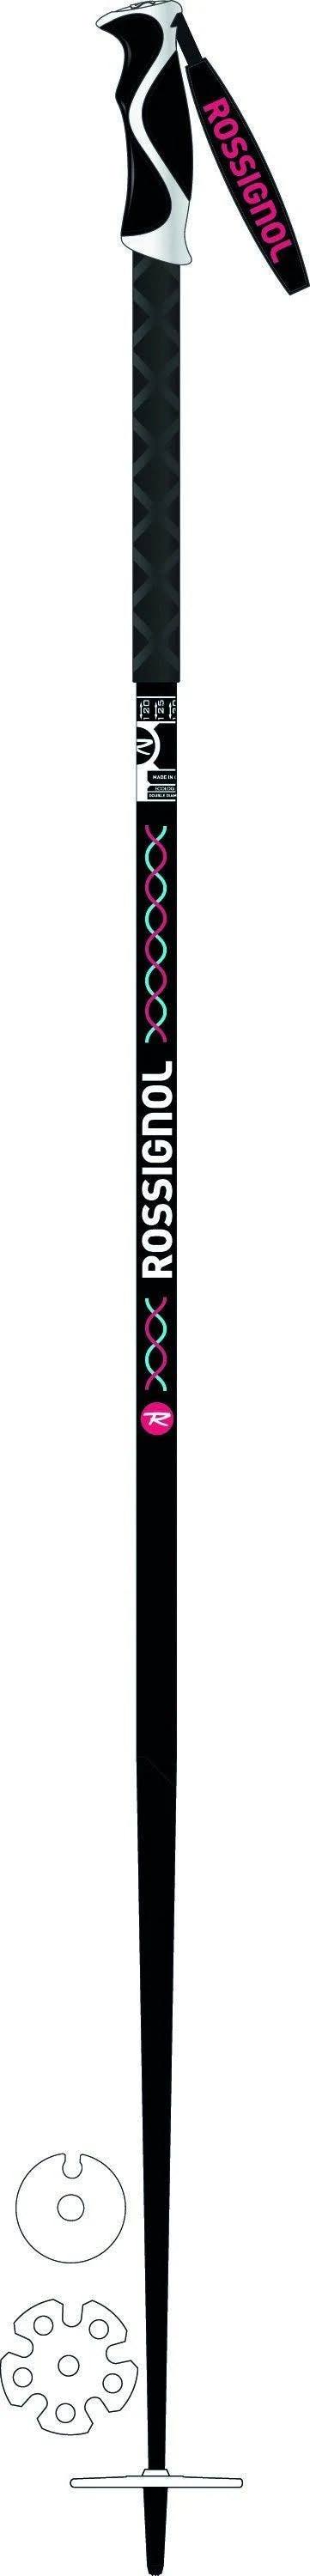 Rossignol Double Diamond Pro Ski Poles